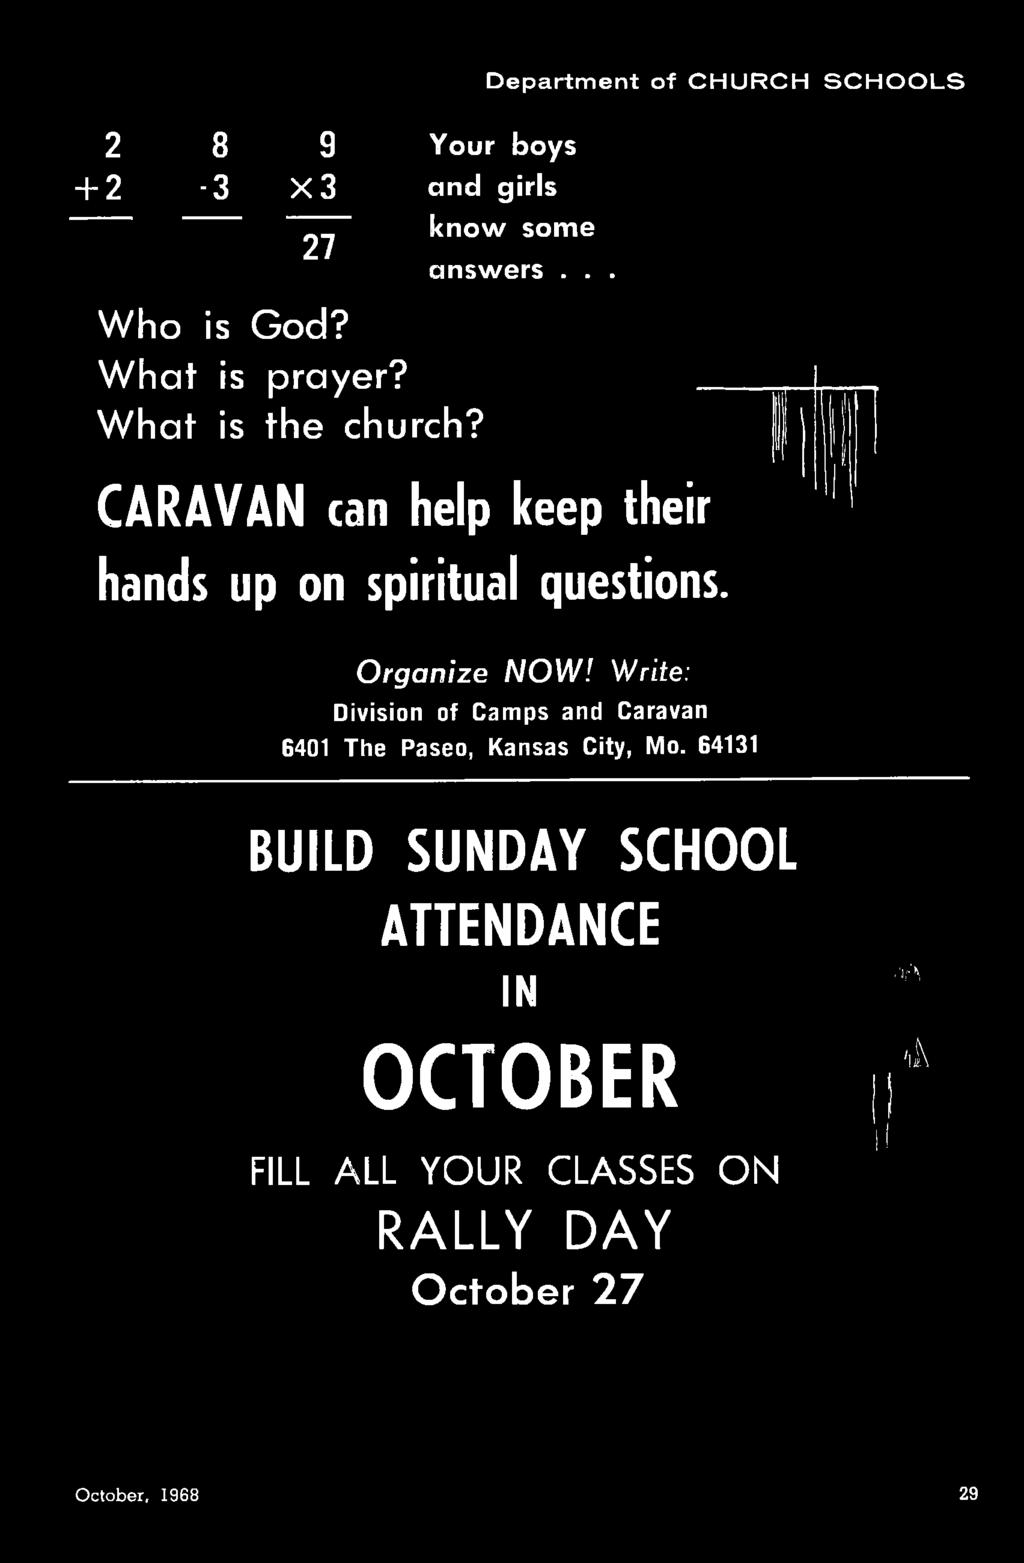 CARAVAN can help keep their hands up on spiritual questions. Organize N O W!